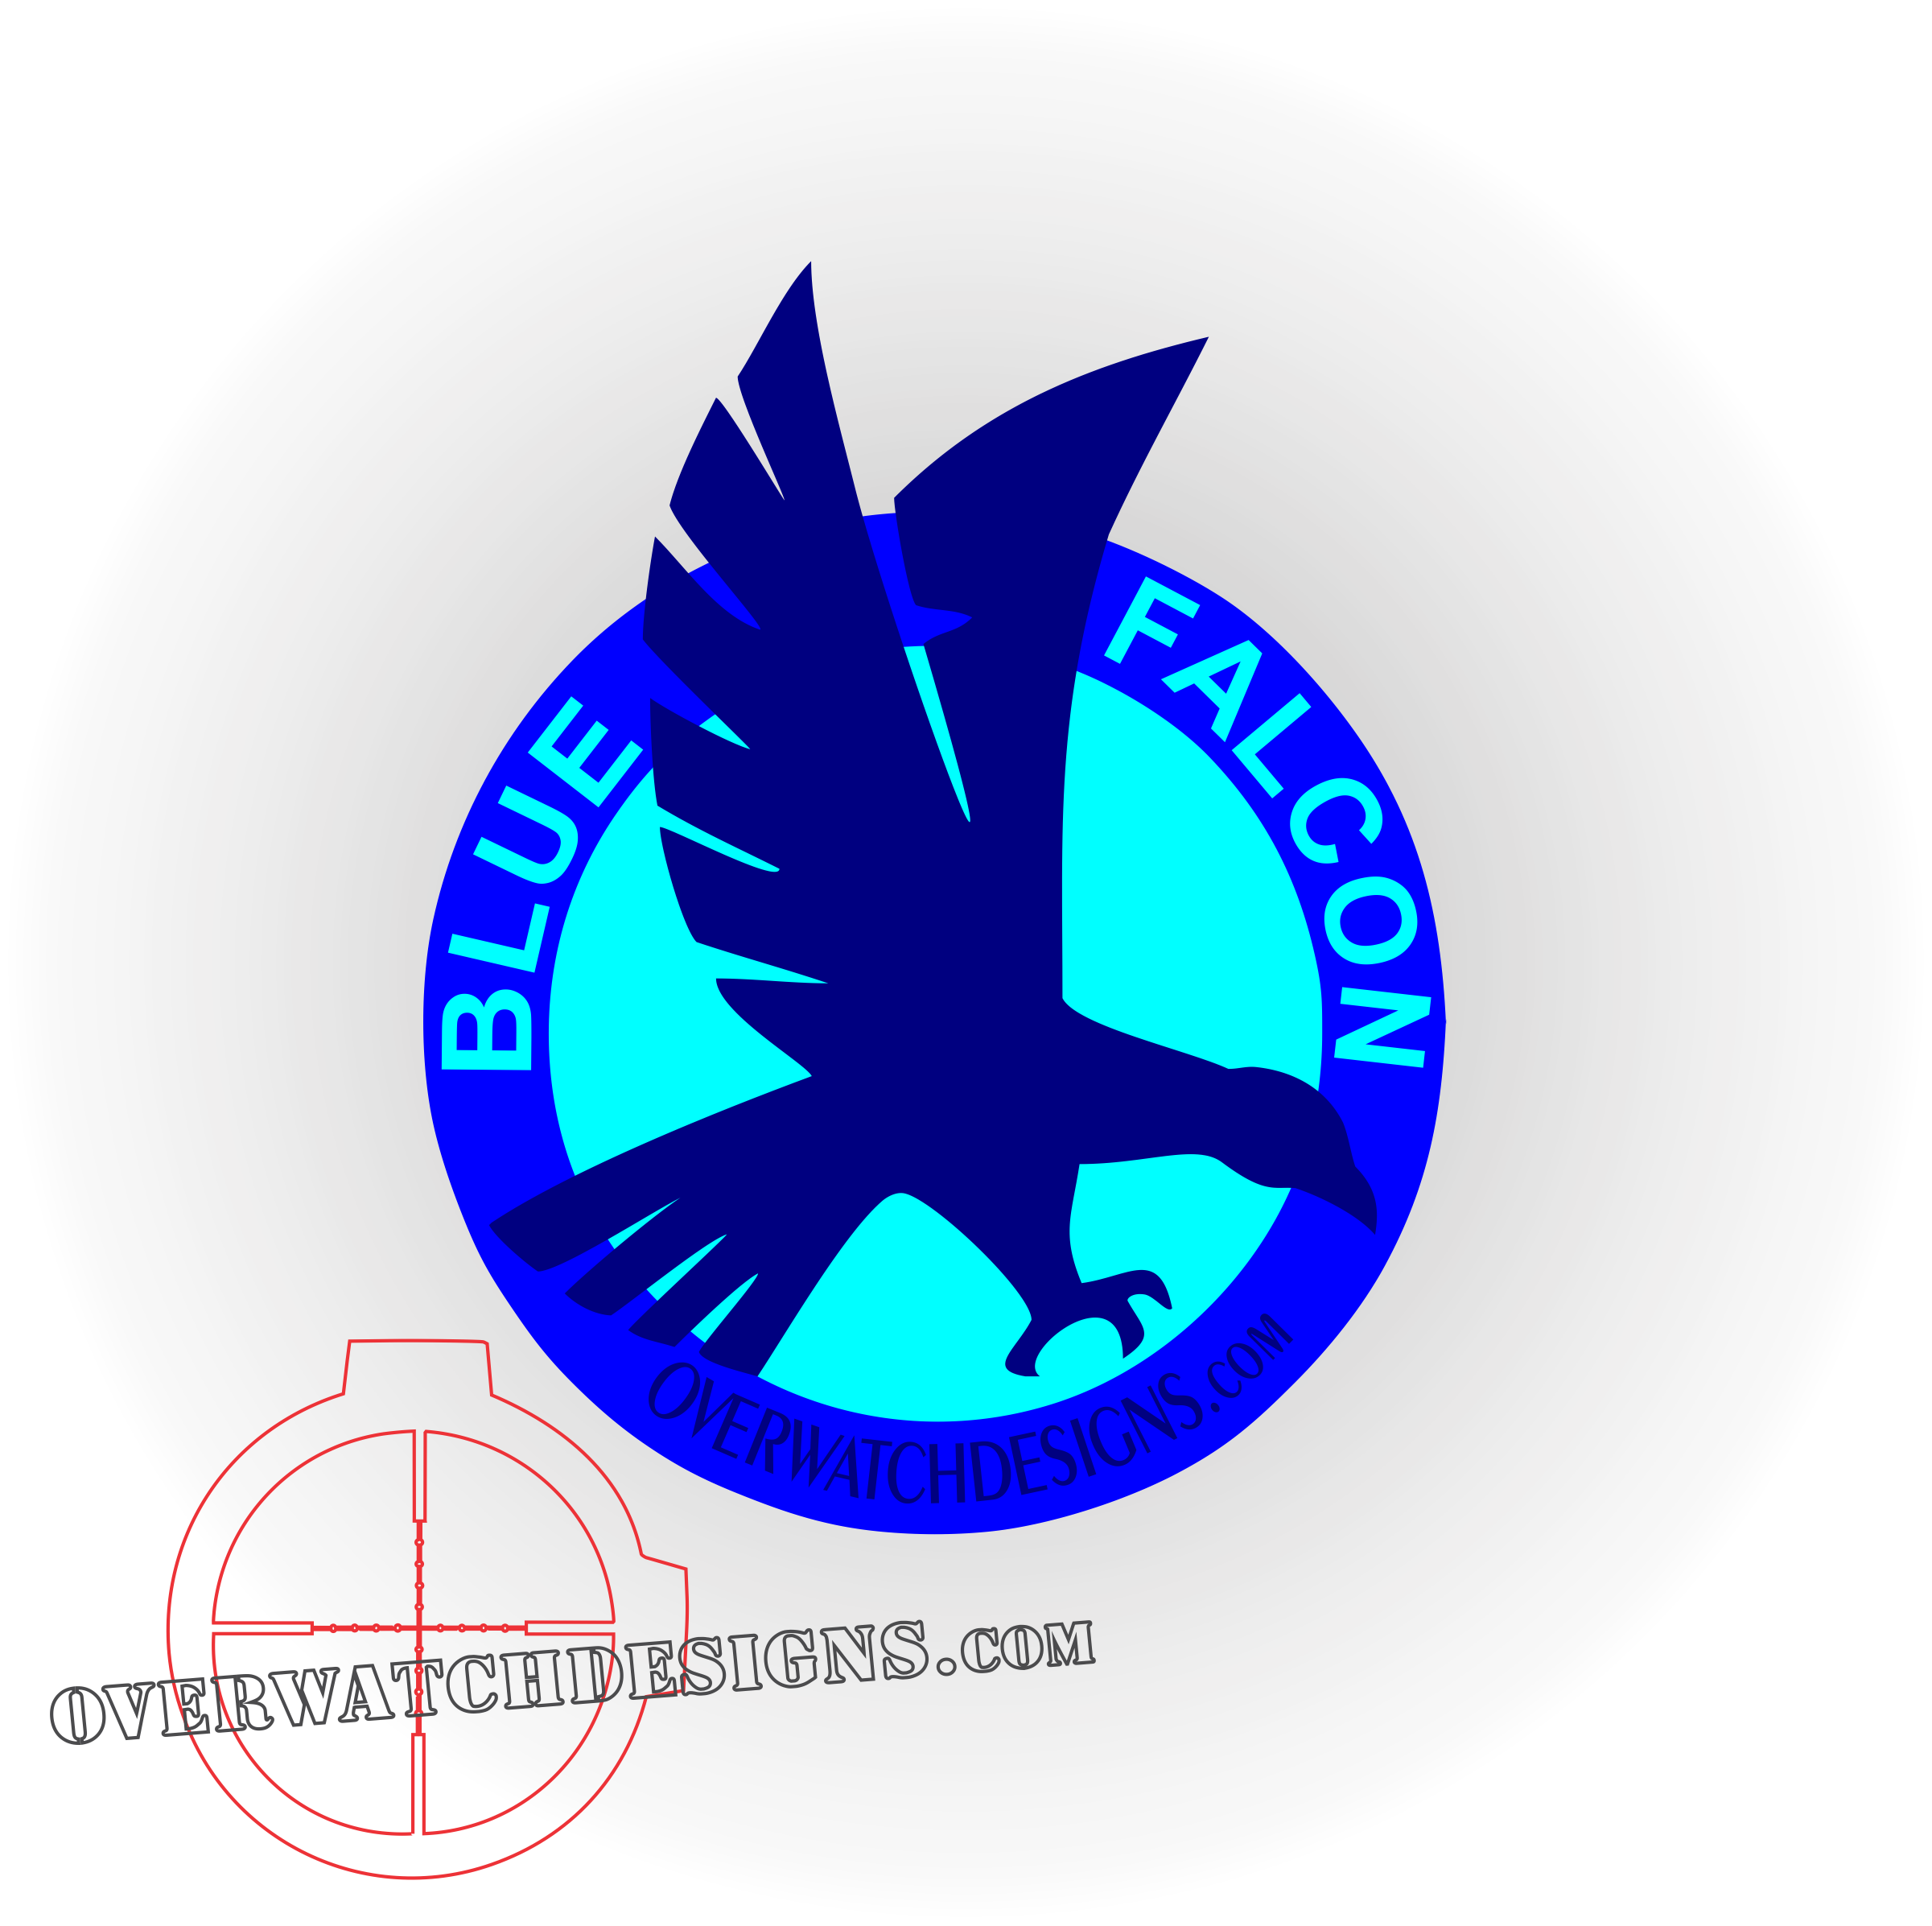 blue falcon head logo